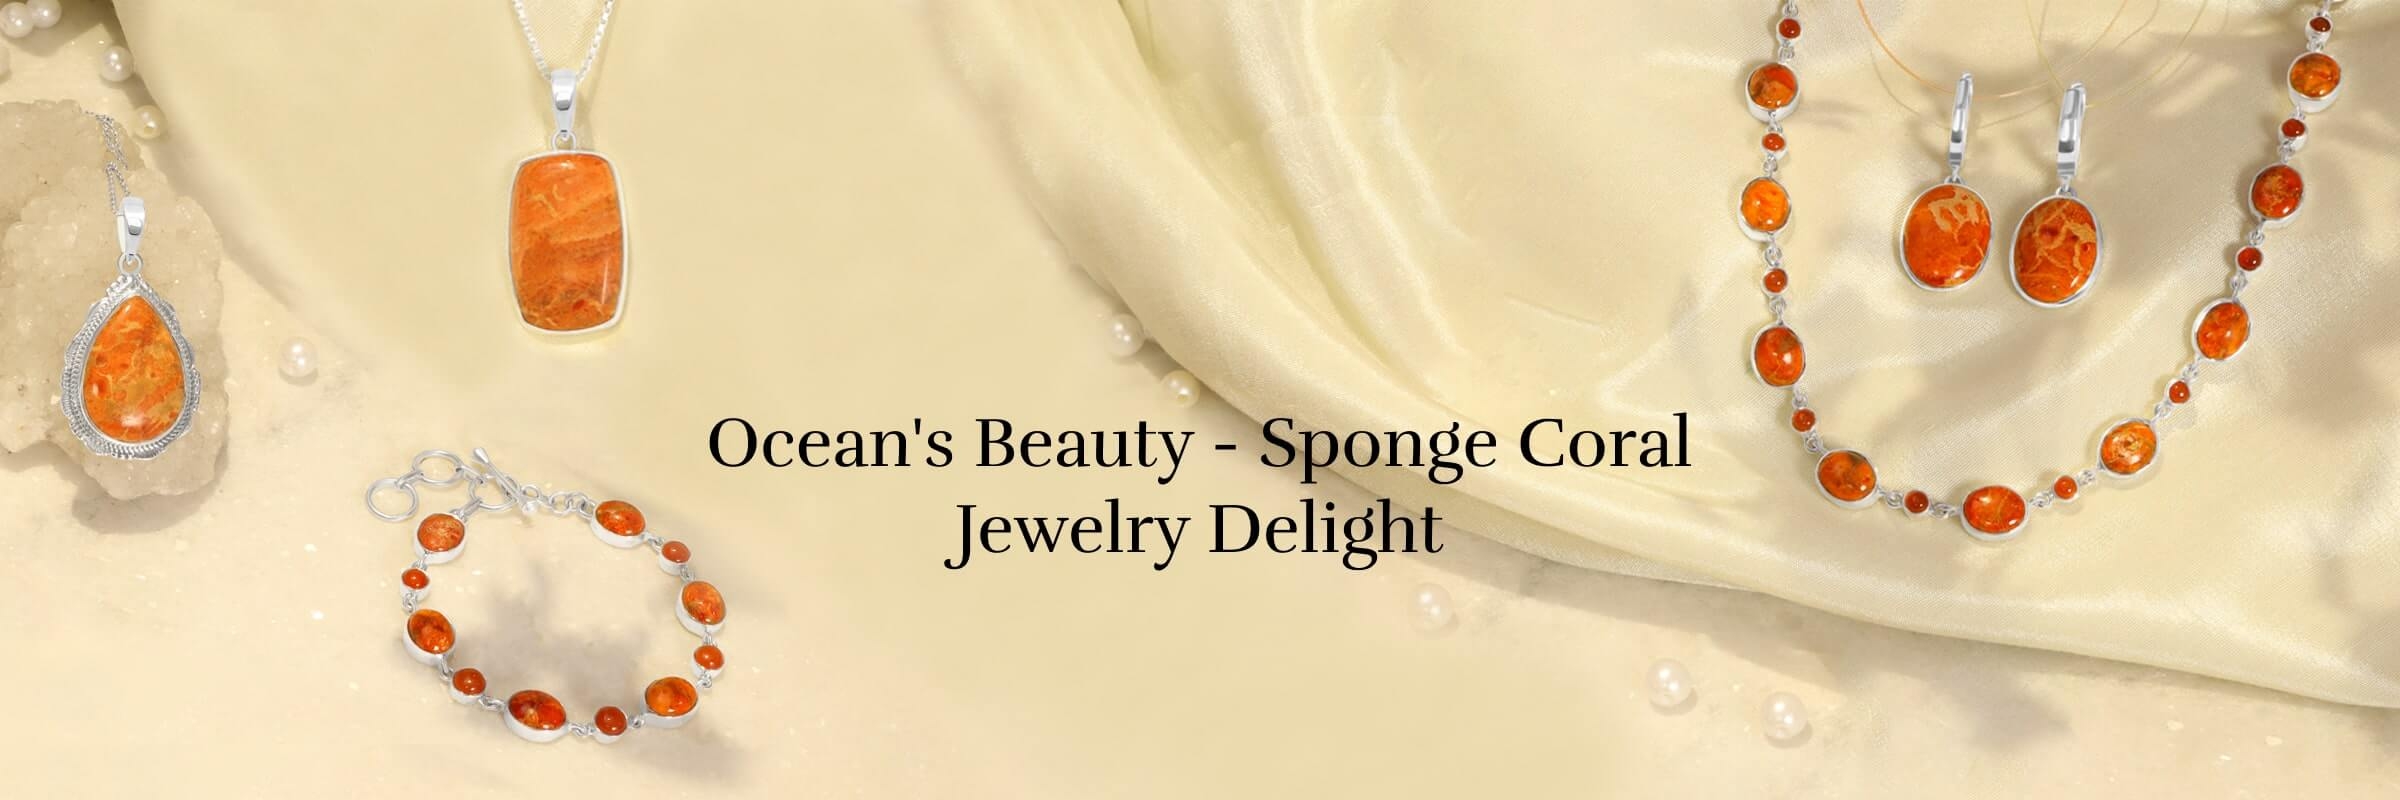 Sponge Coral Jewelry